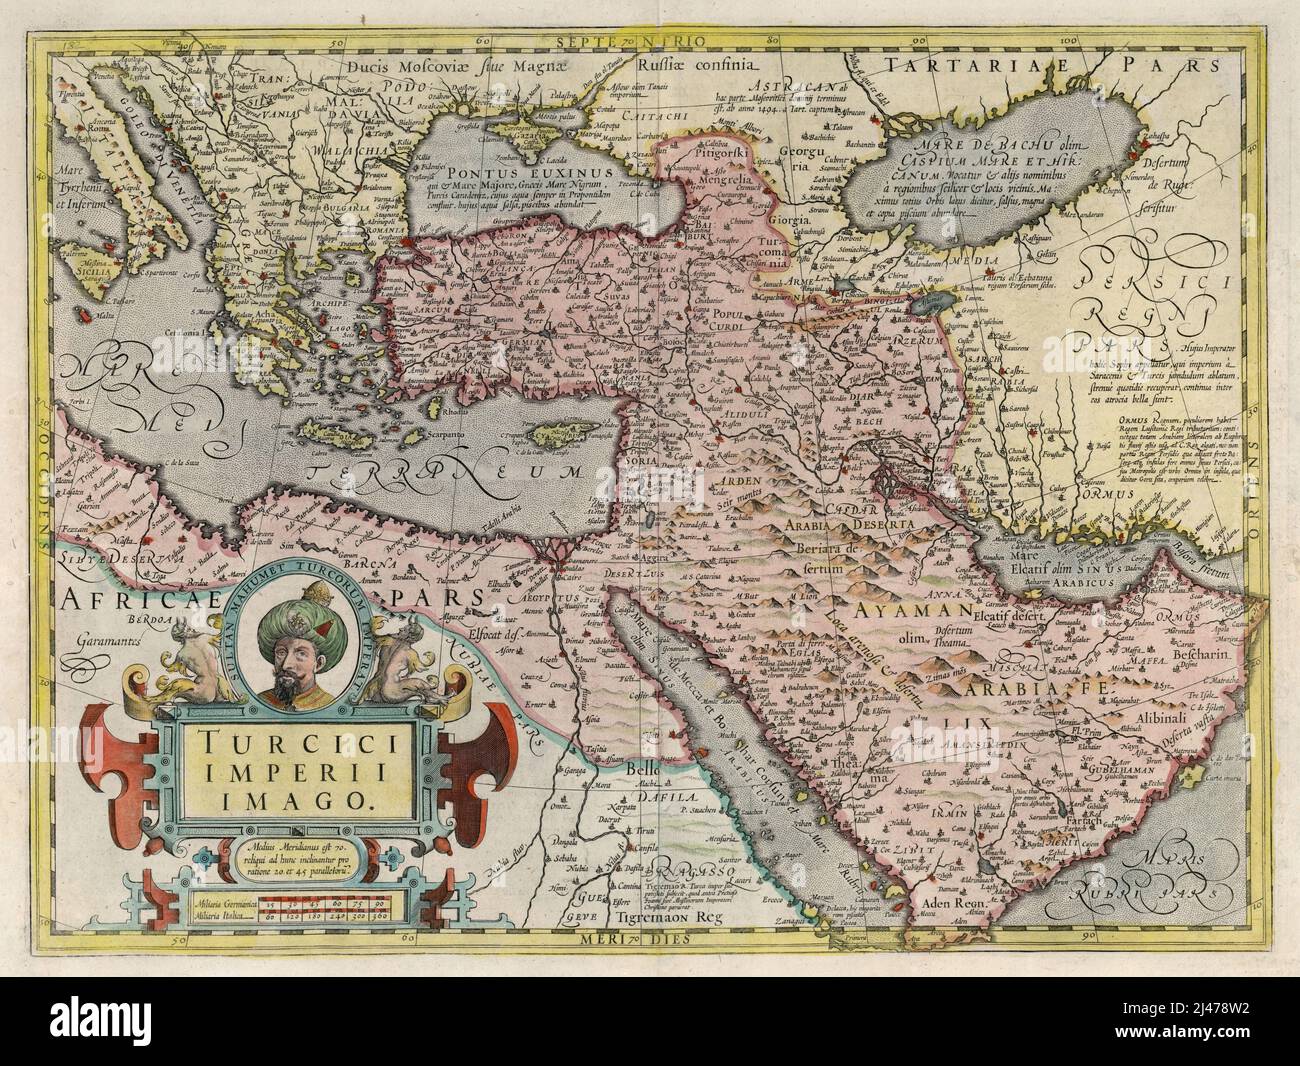 Seventeenth century illustrated map of the Turkish Empire (Ottoman Empire) created by Jodocus Hondius, ca. 1600-1625, Stock Photo